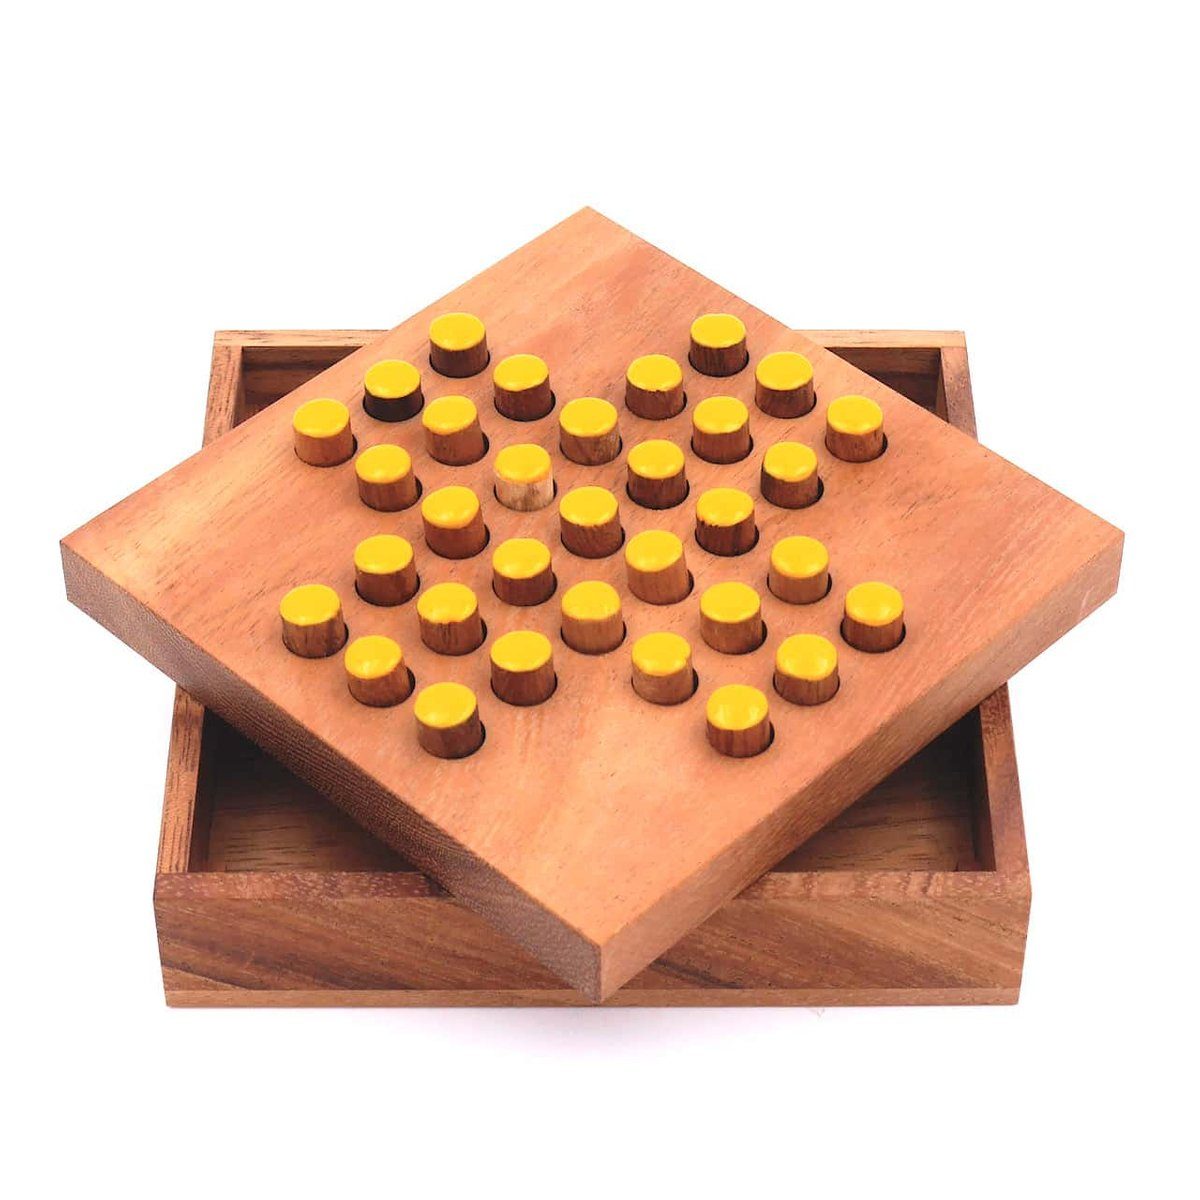 ROMBOL Denkspiele Spiel, Steckspiel aus Holz, edlem - Klassiker Solitaire Holzspiel unterhaltsamer gelb